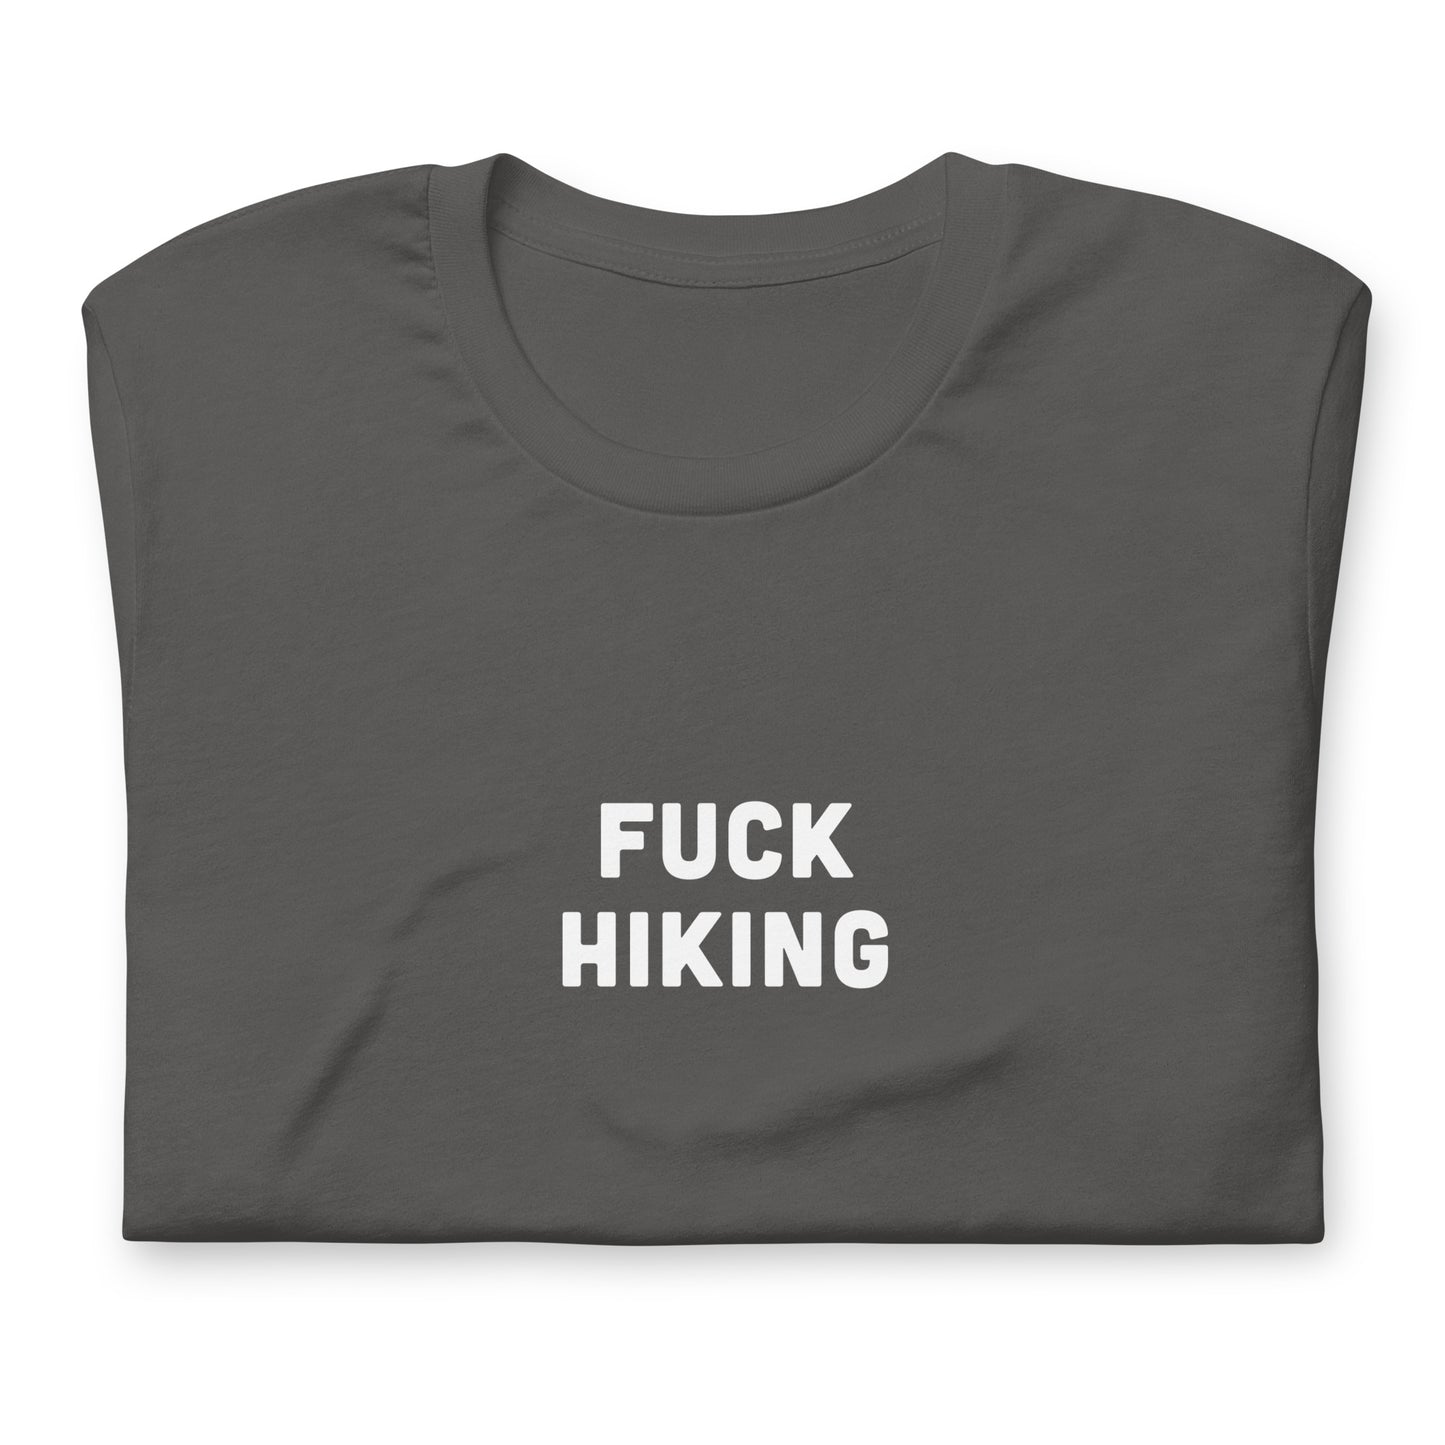 Fuck Hiking T-Shirt Size 2XL Color Black